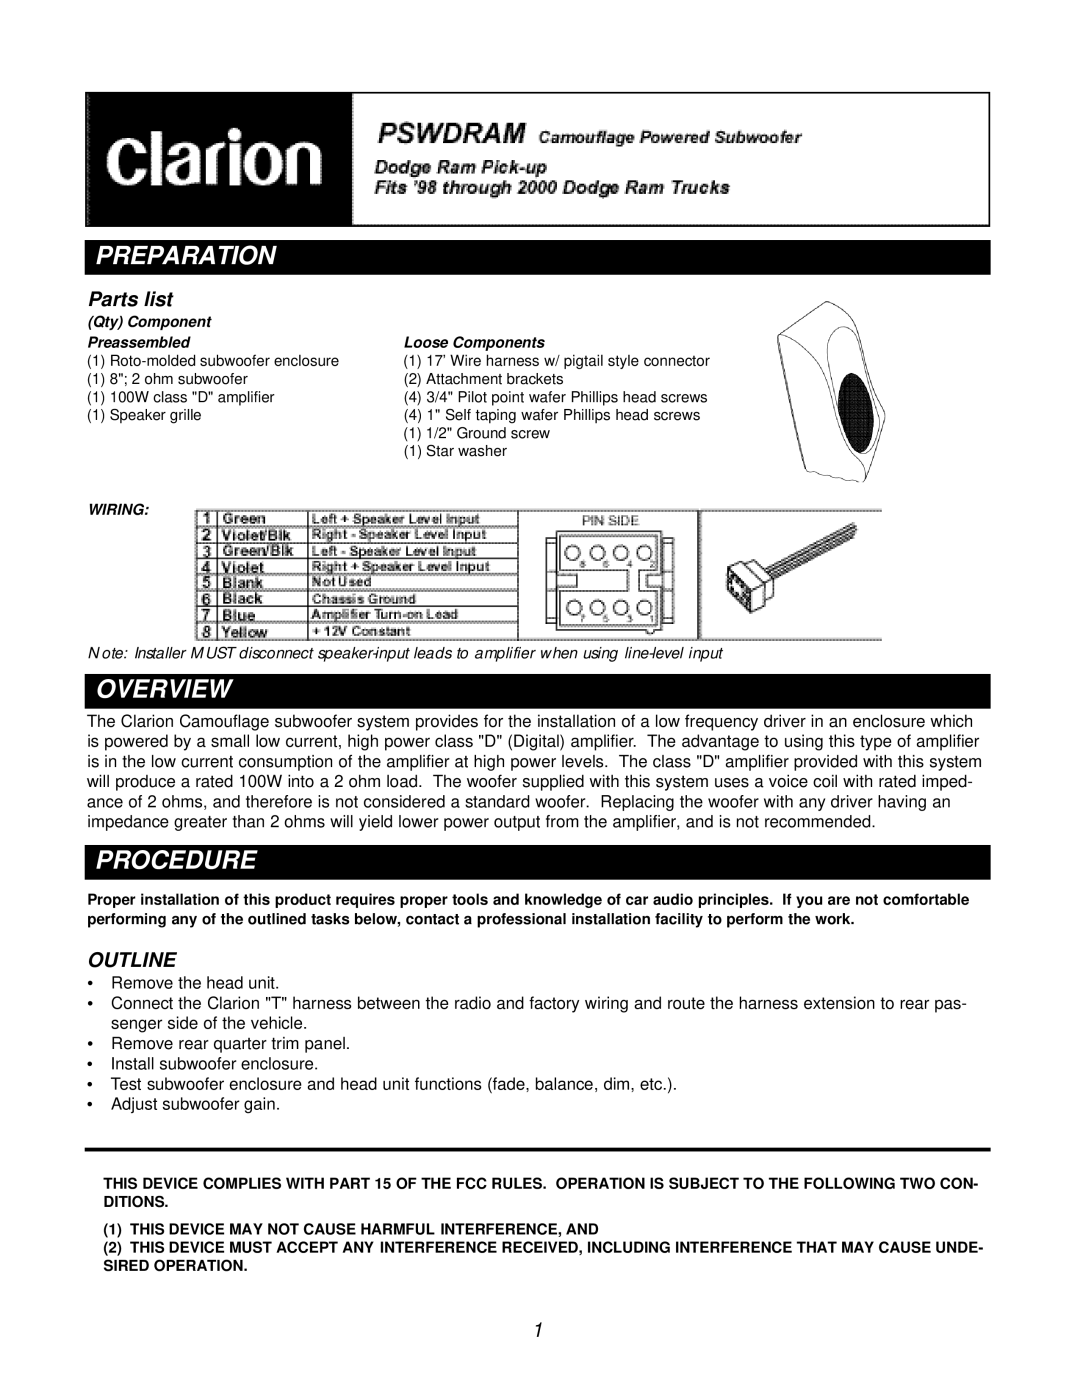 Clarion PSWDRAM manual Preparation, Overview, Procedure, Parts list, Outline 